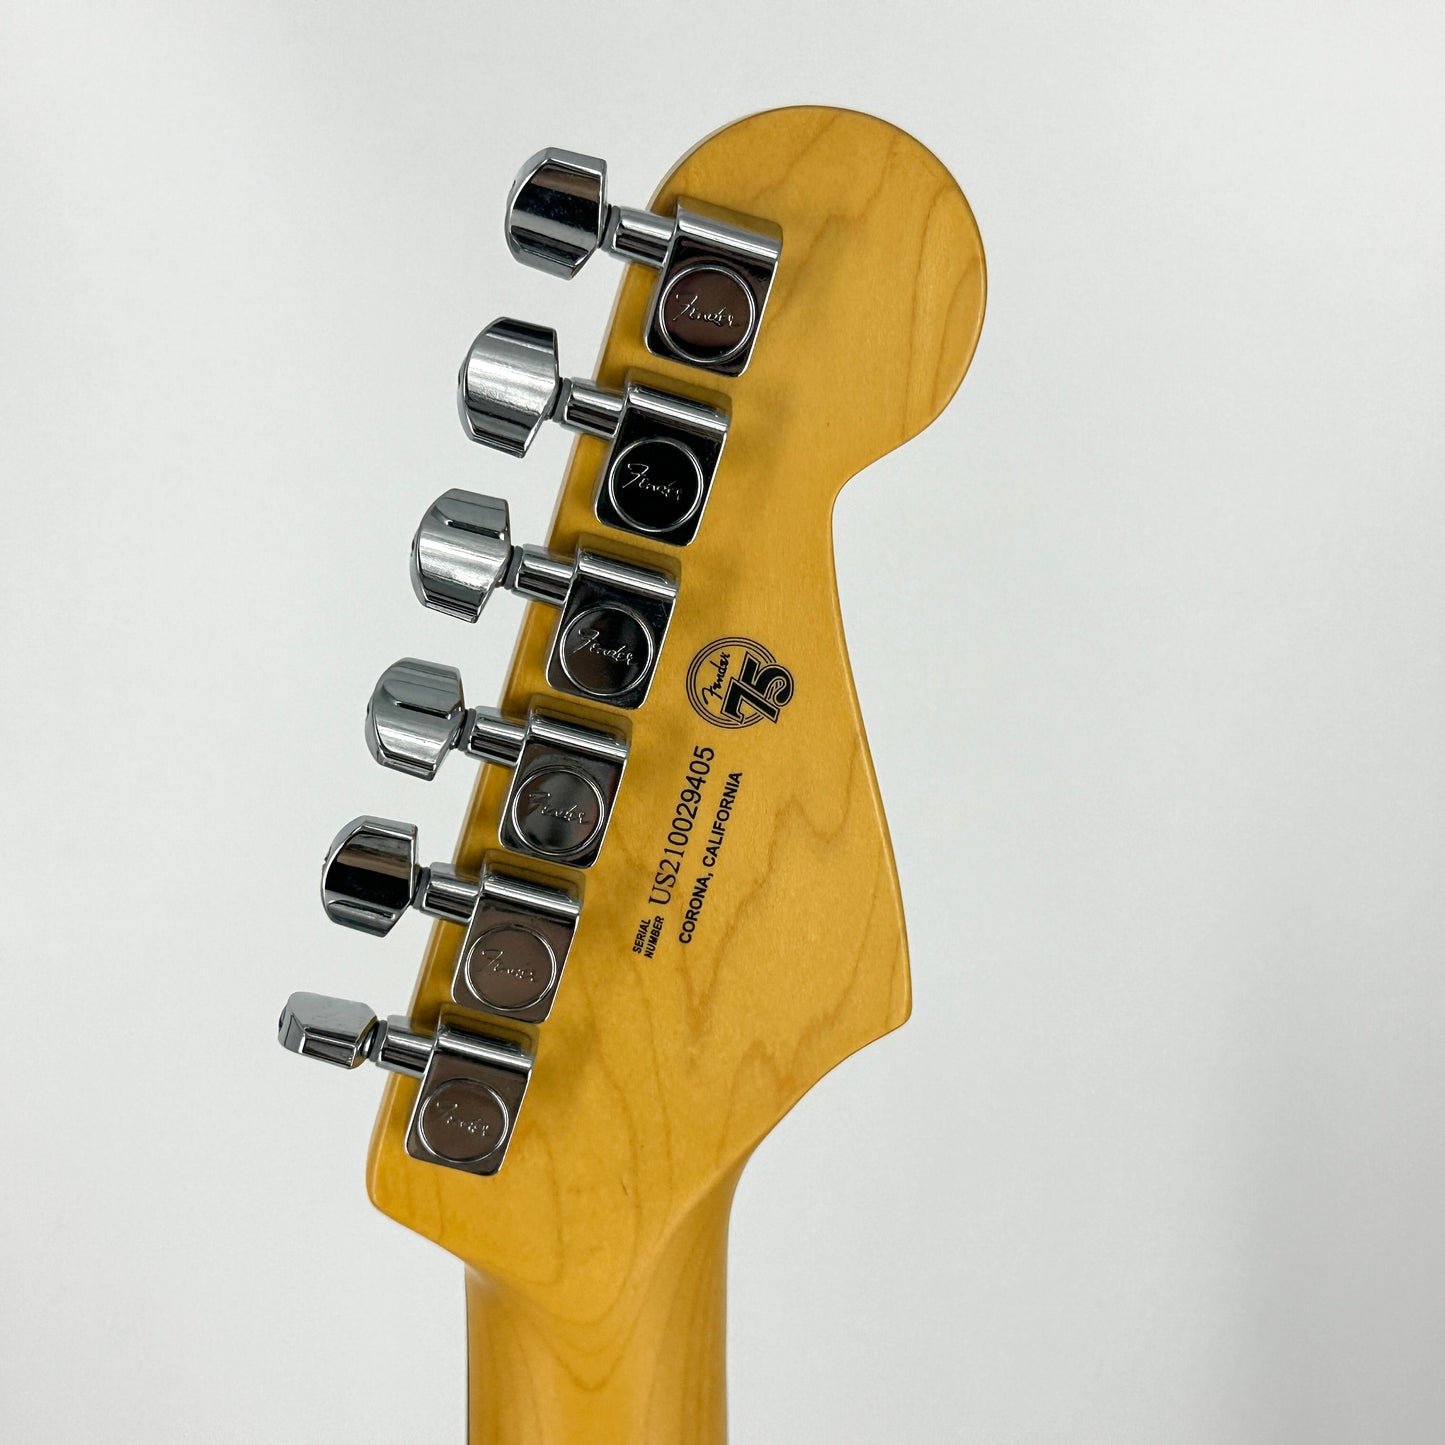 2021 Fender American Professional II Left Handed Stratocaster – Dark Night